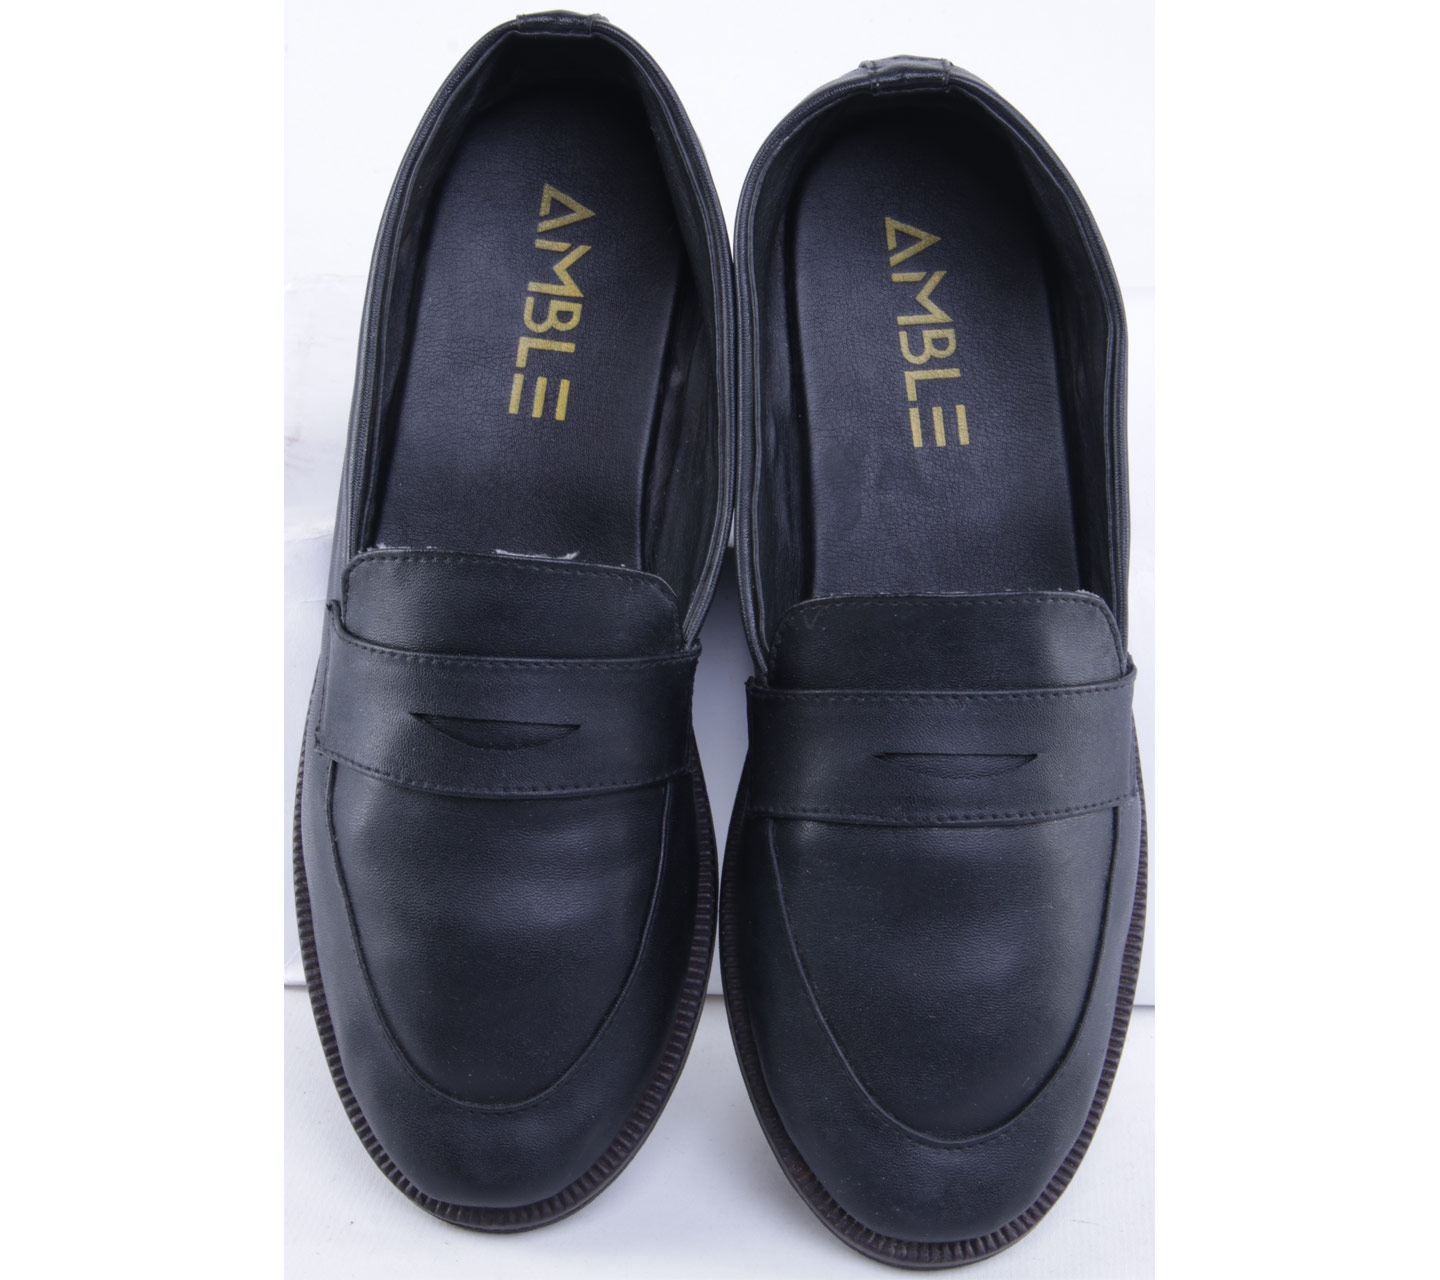 Amble Black Slip On Flat Shoes